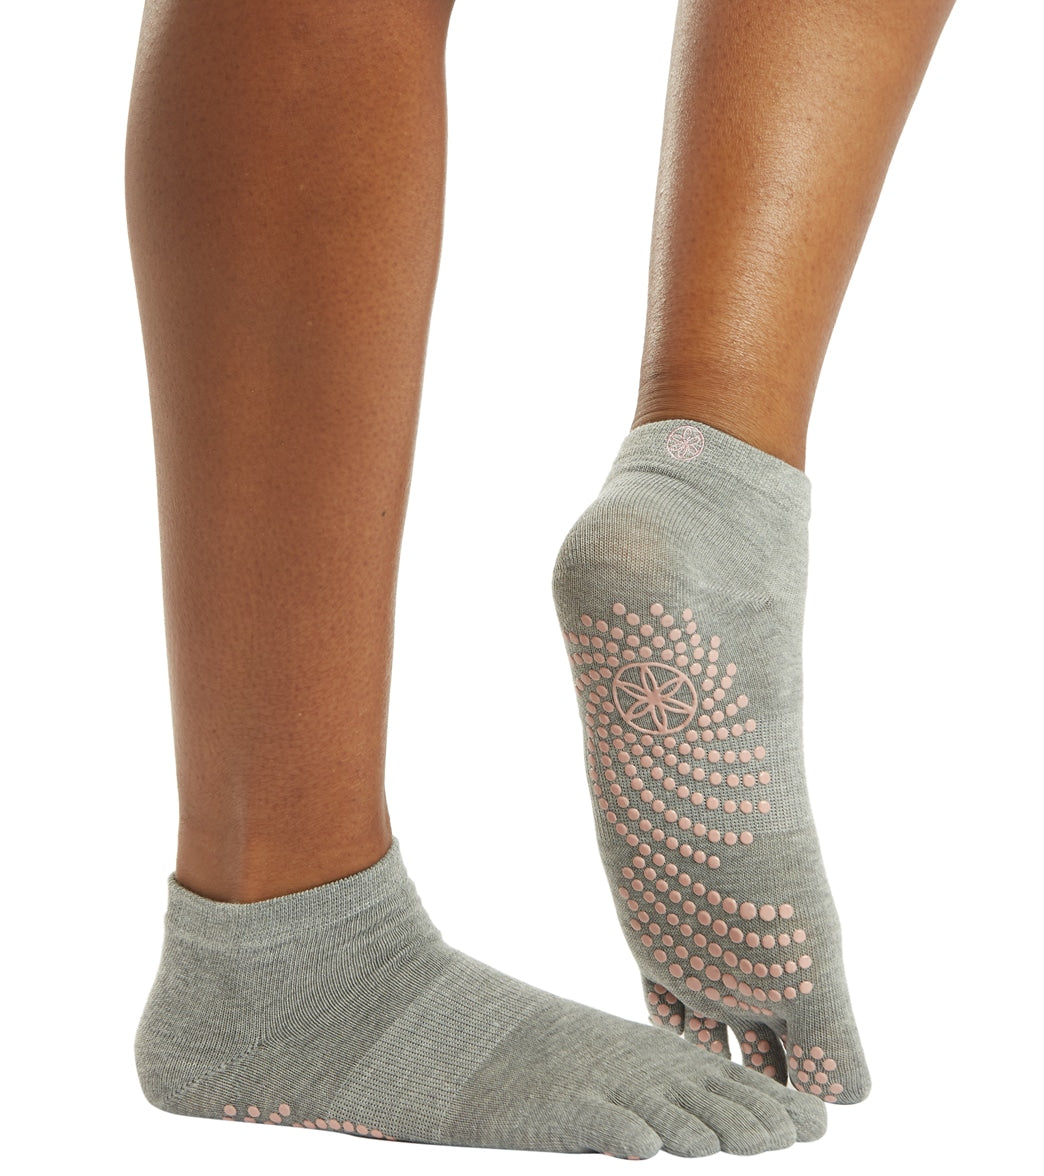 Yoga Socks, Stirrup Socks, Meditation Gift, Yogi Gift, Grip Socks, Athletic  Socks, Handknit Socks, Toeless Socks, Leg Warmers, Dance Socks -  Canada